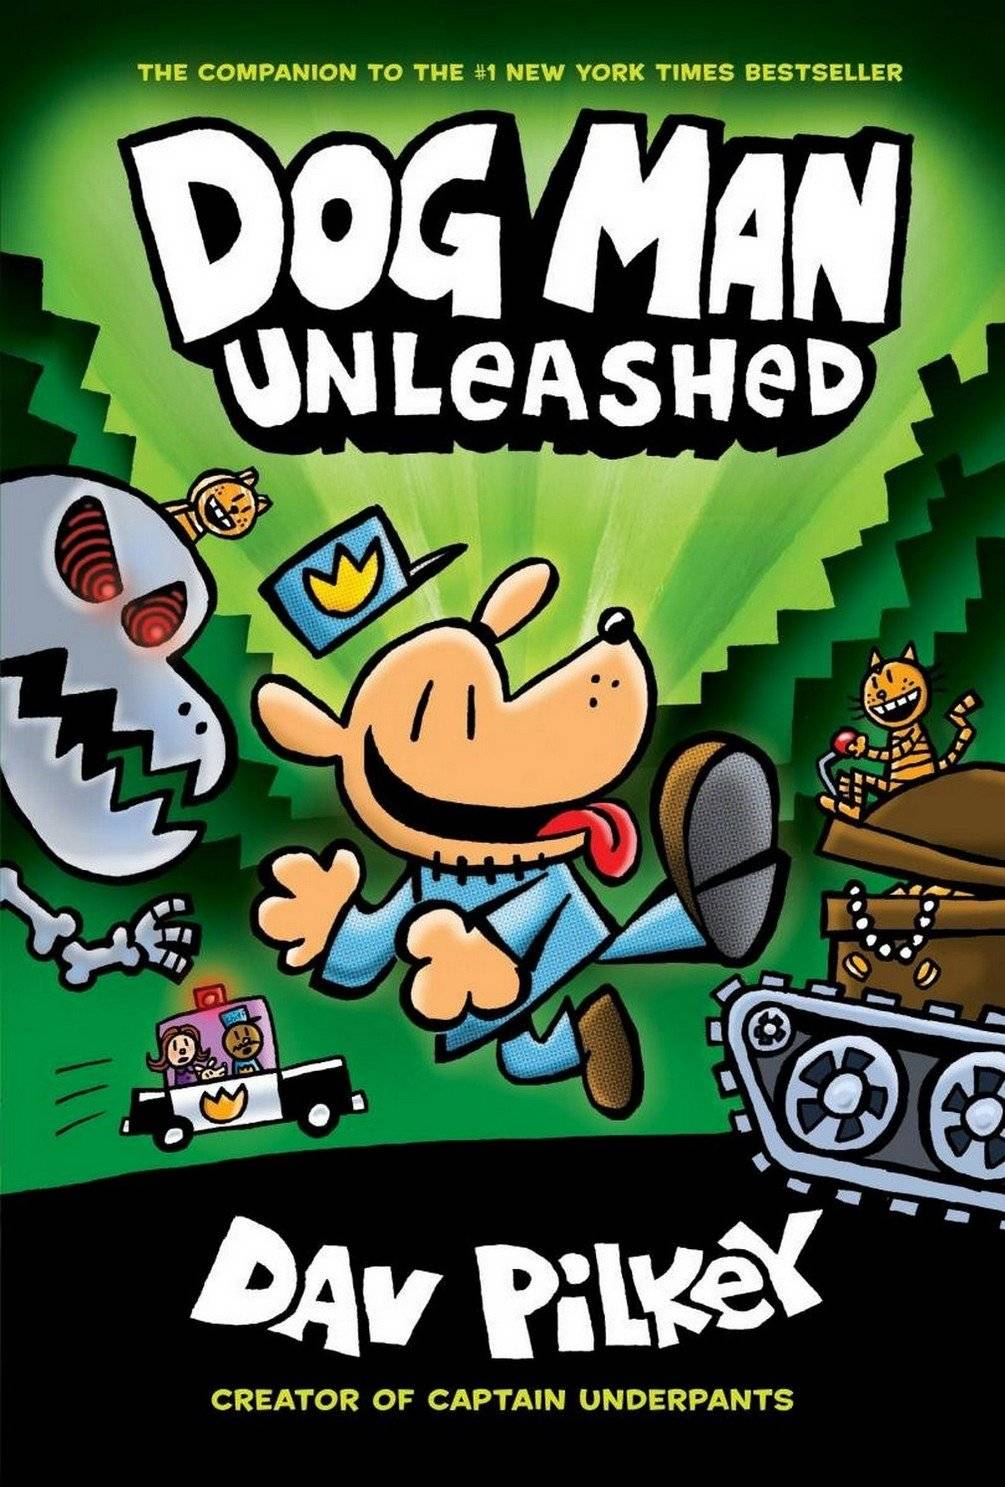 IMG : Dogman The epic collection: Dogman unleashed